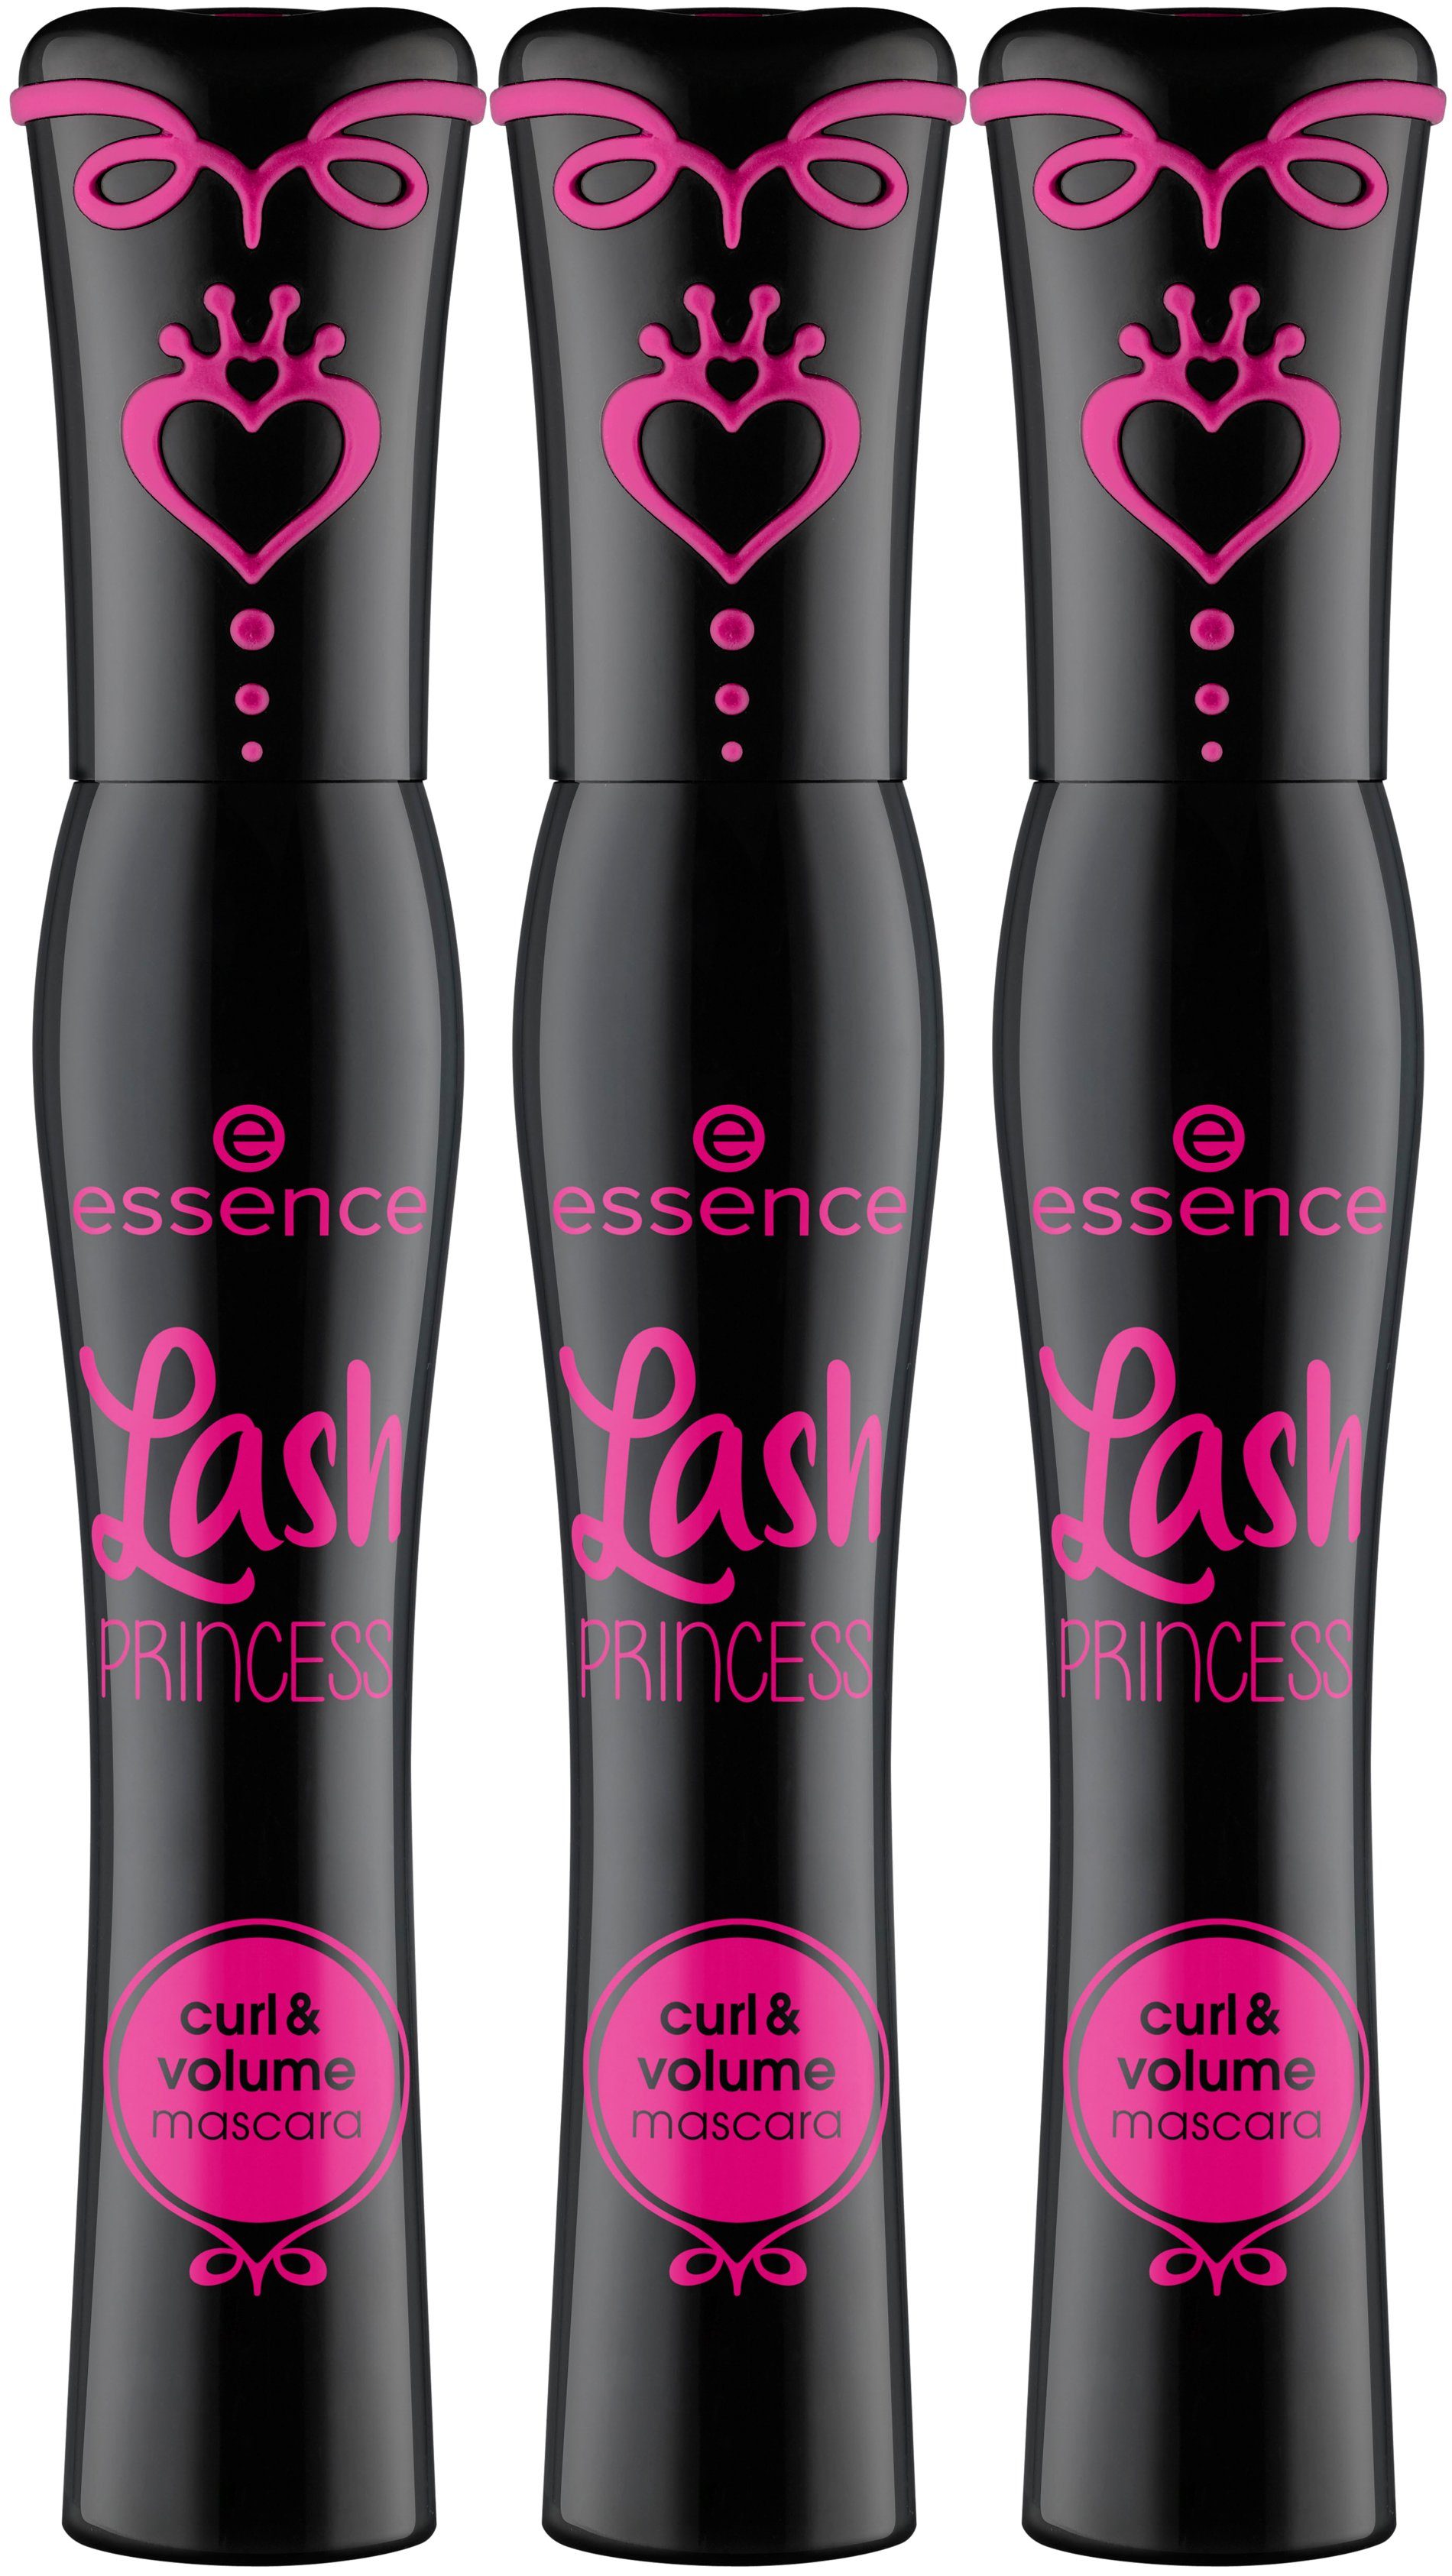 Essence Mascara mascara, 3-tlg. & PRINCESS volume Lash curl